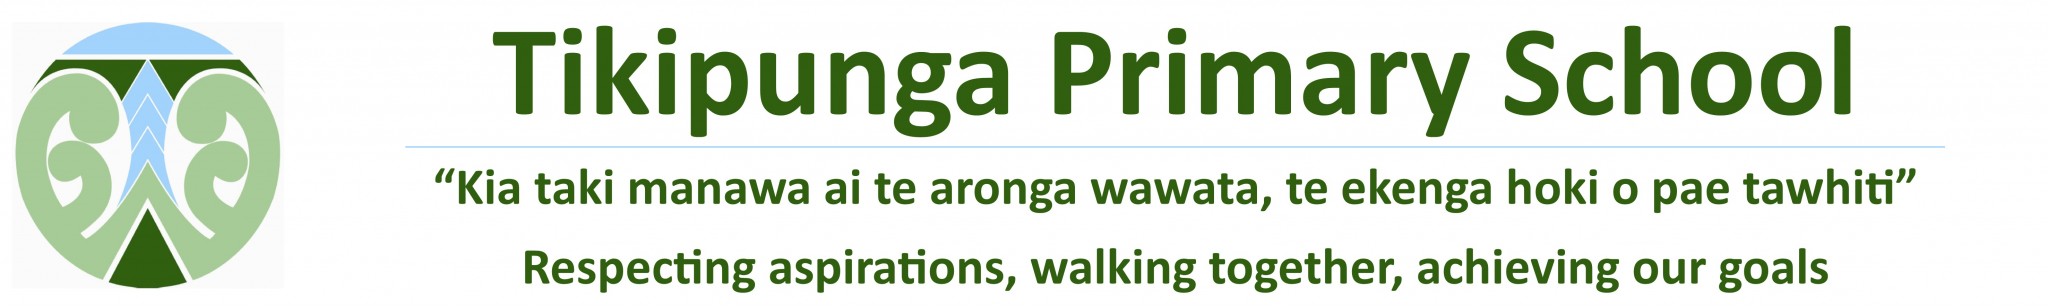 Tikipunga Primary School Logo